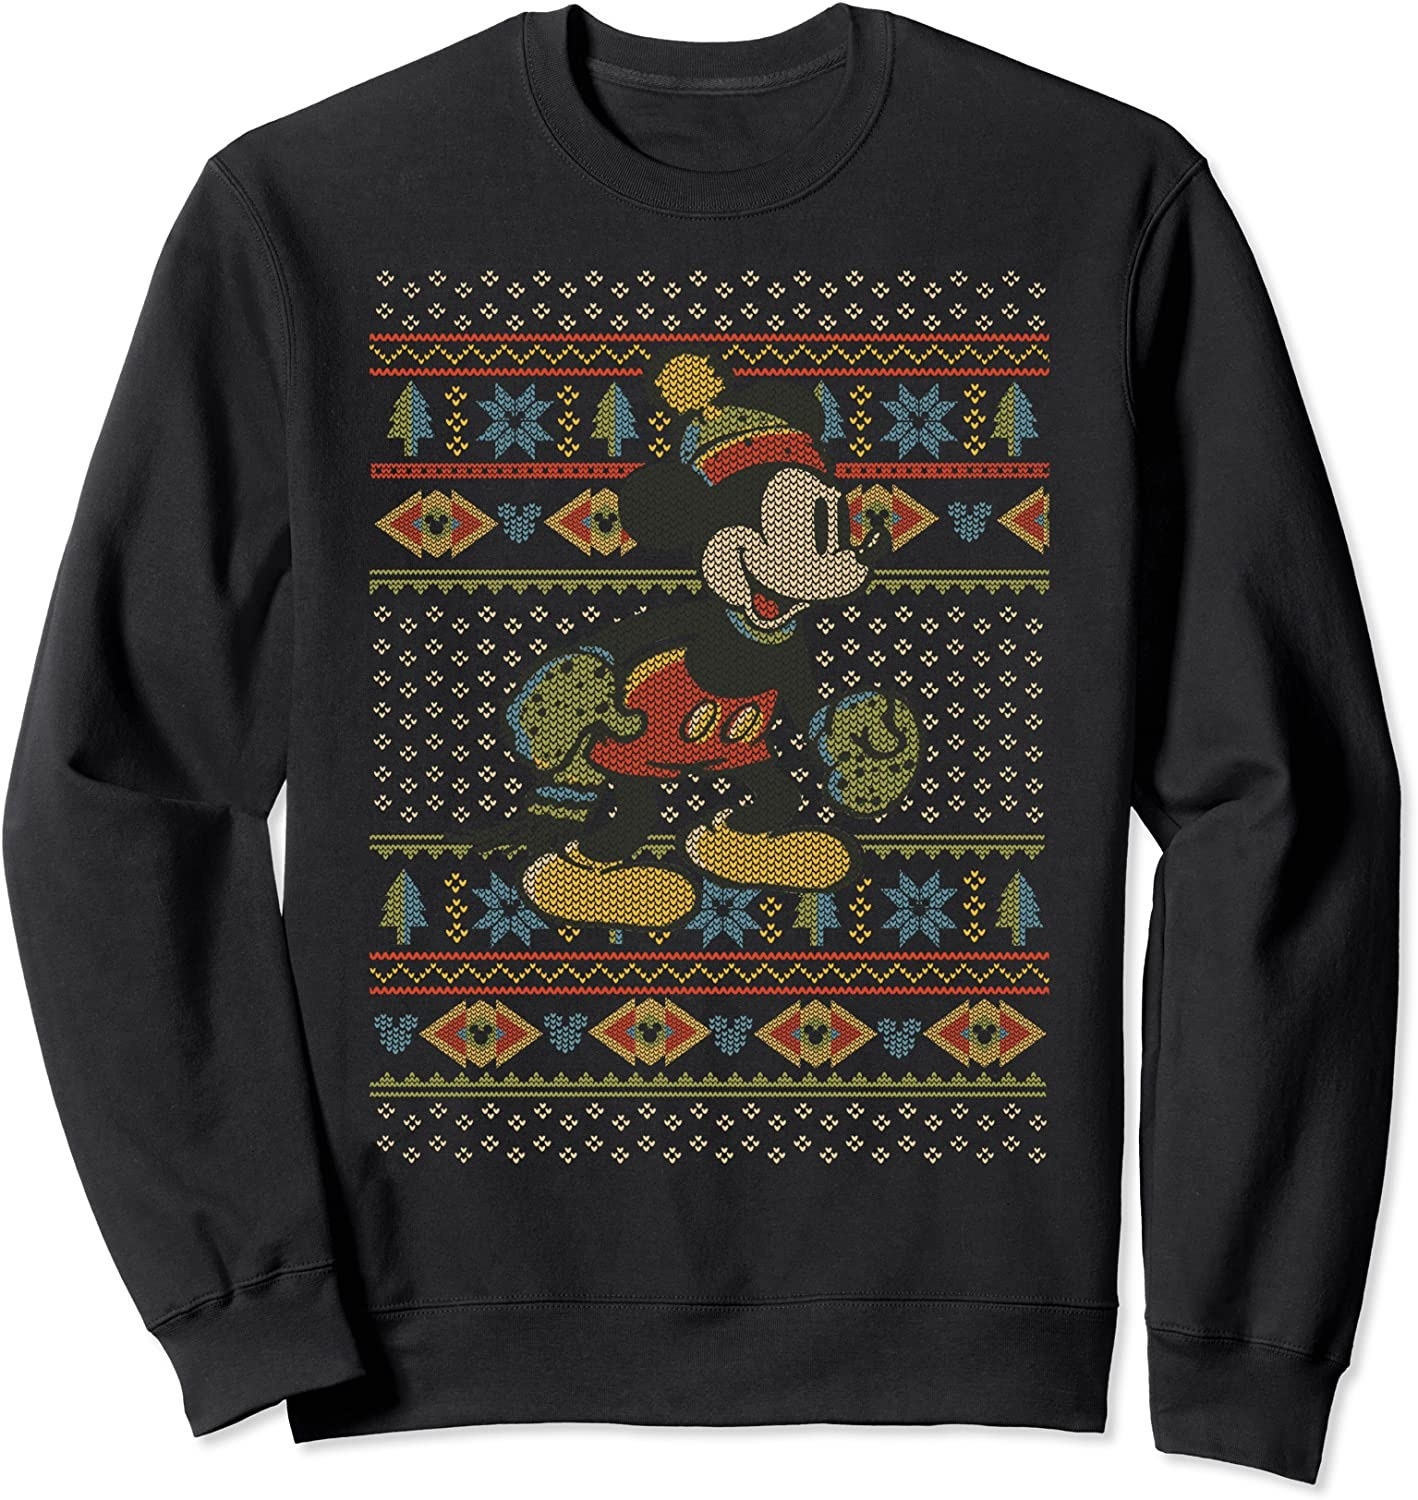 Mickey-themed Christmas sweater